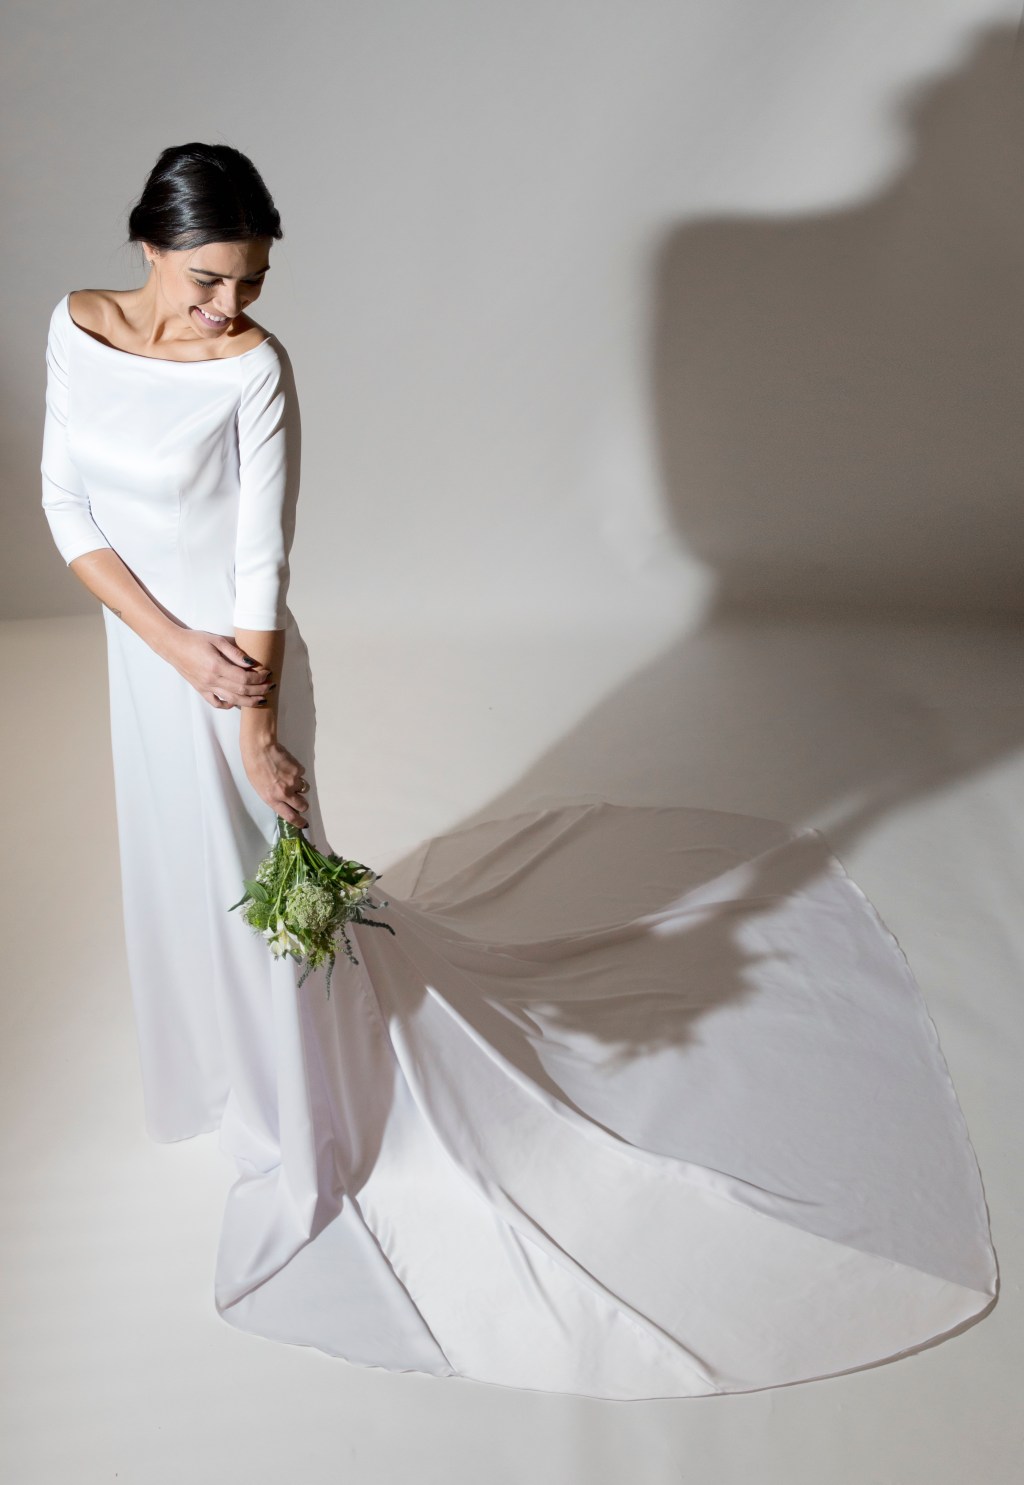 Marca brasileira cria vestido de noiva inspirado no de Meghan Markle